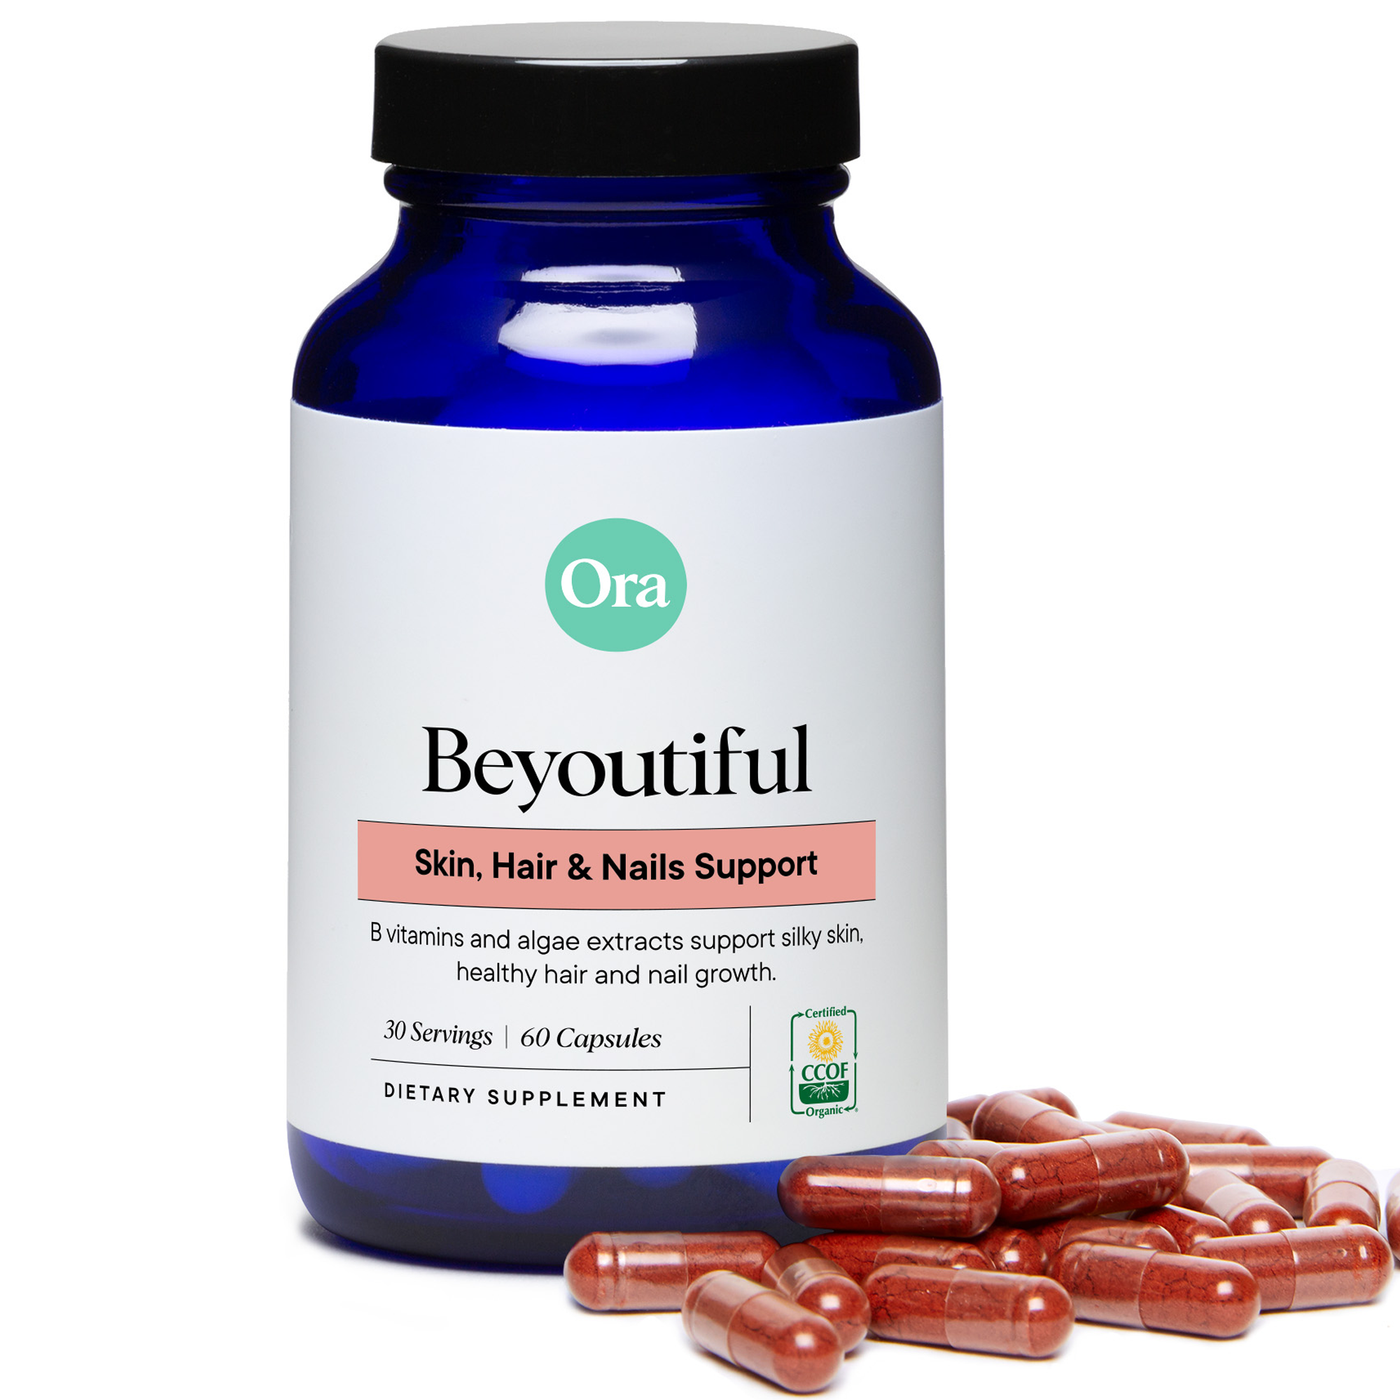 Beyoutiful ules Curated Wellness